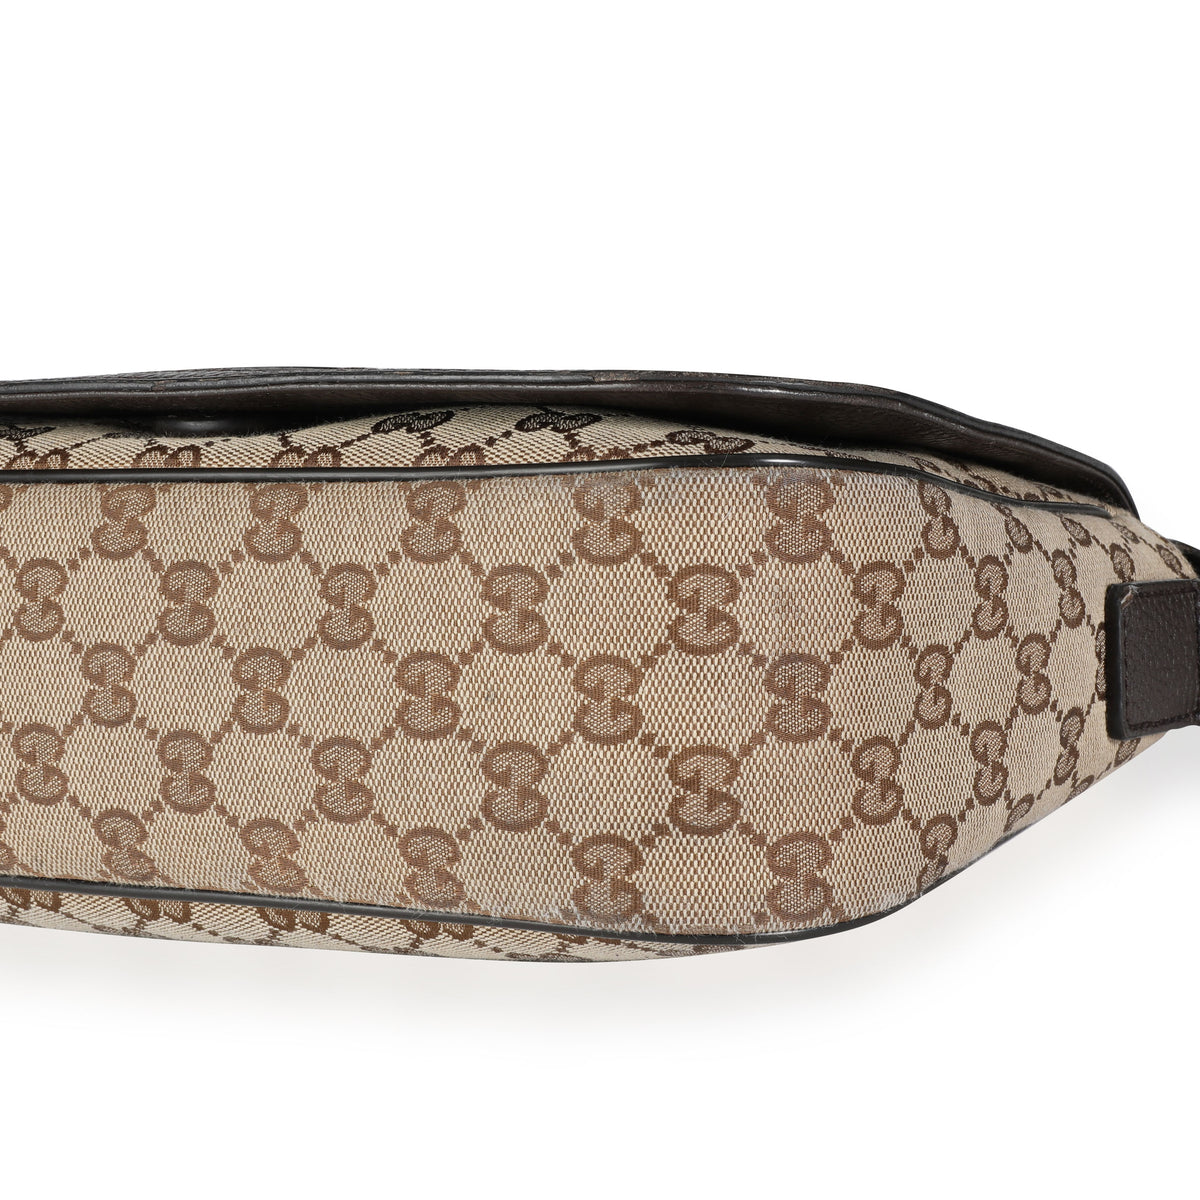 Louis Vuitton - V Tote - Shoulder bag - Catawiki